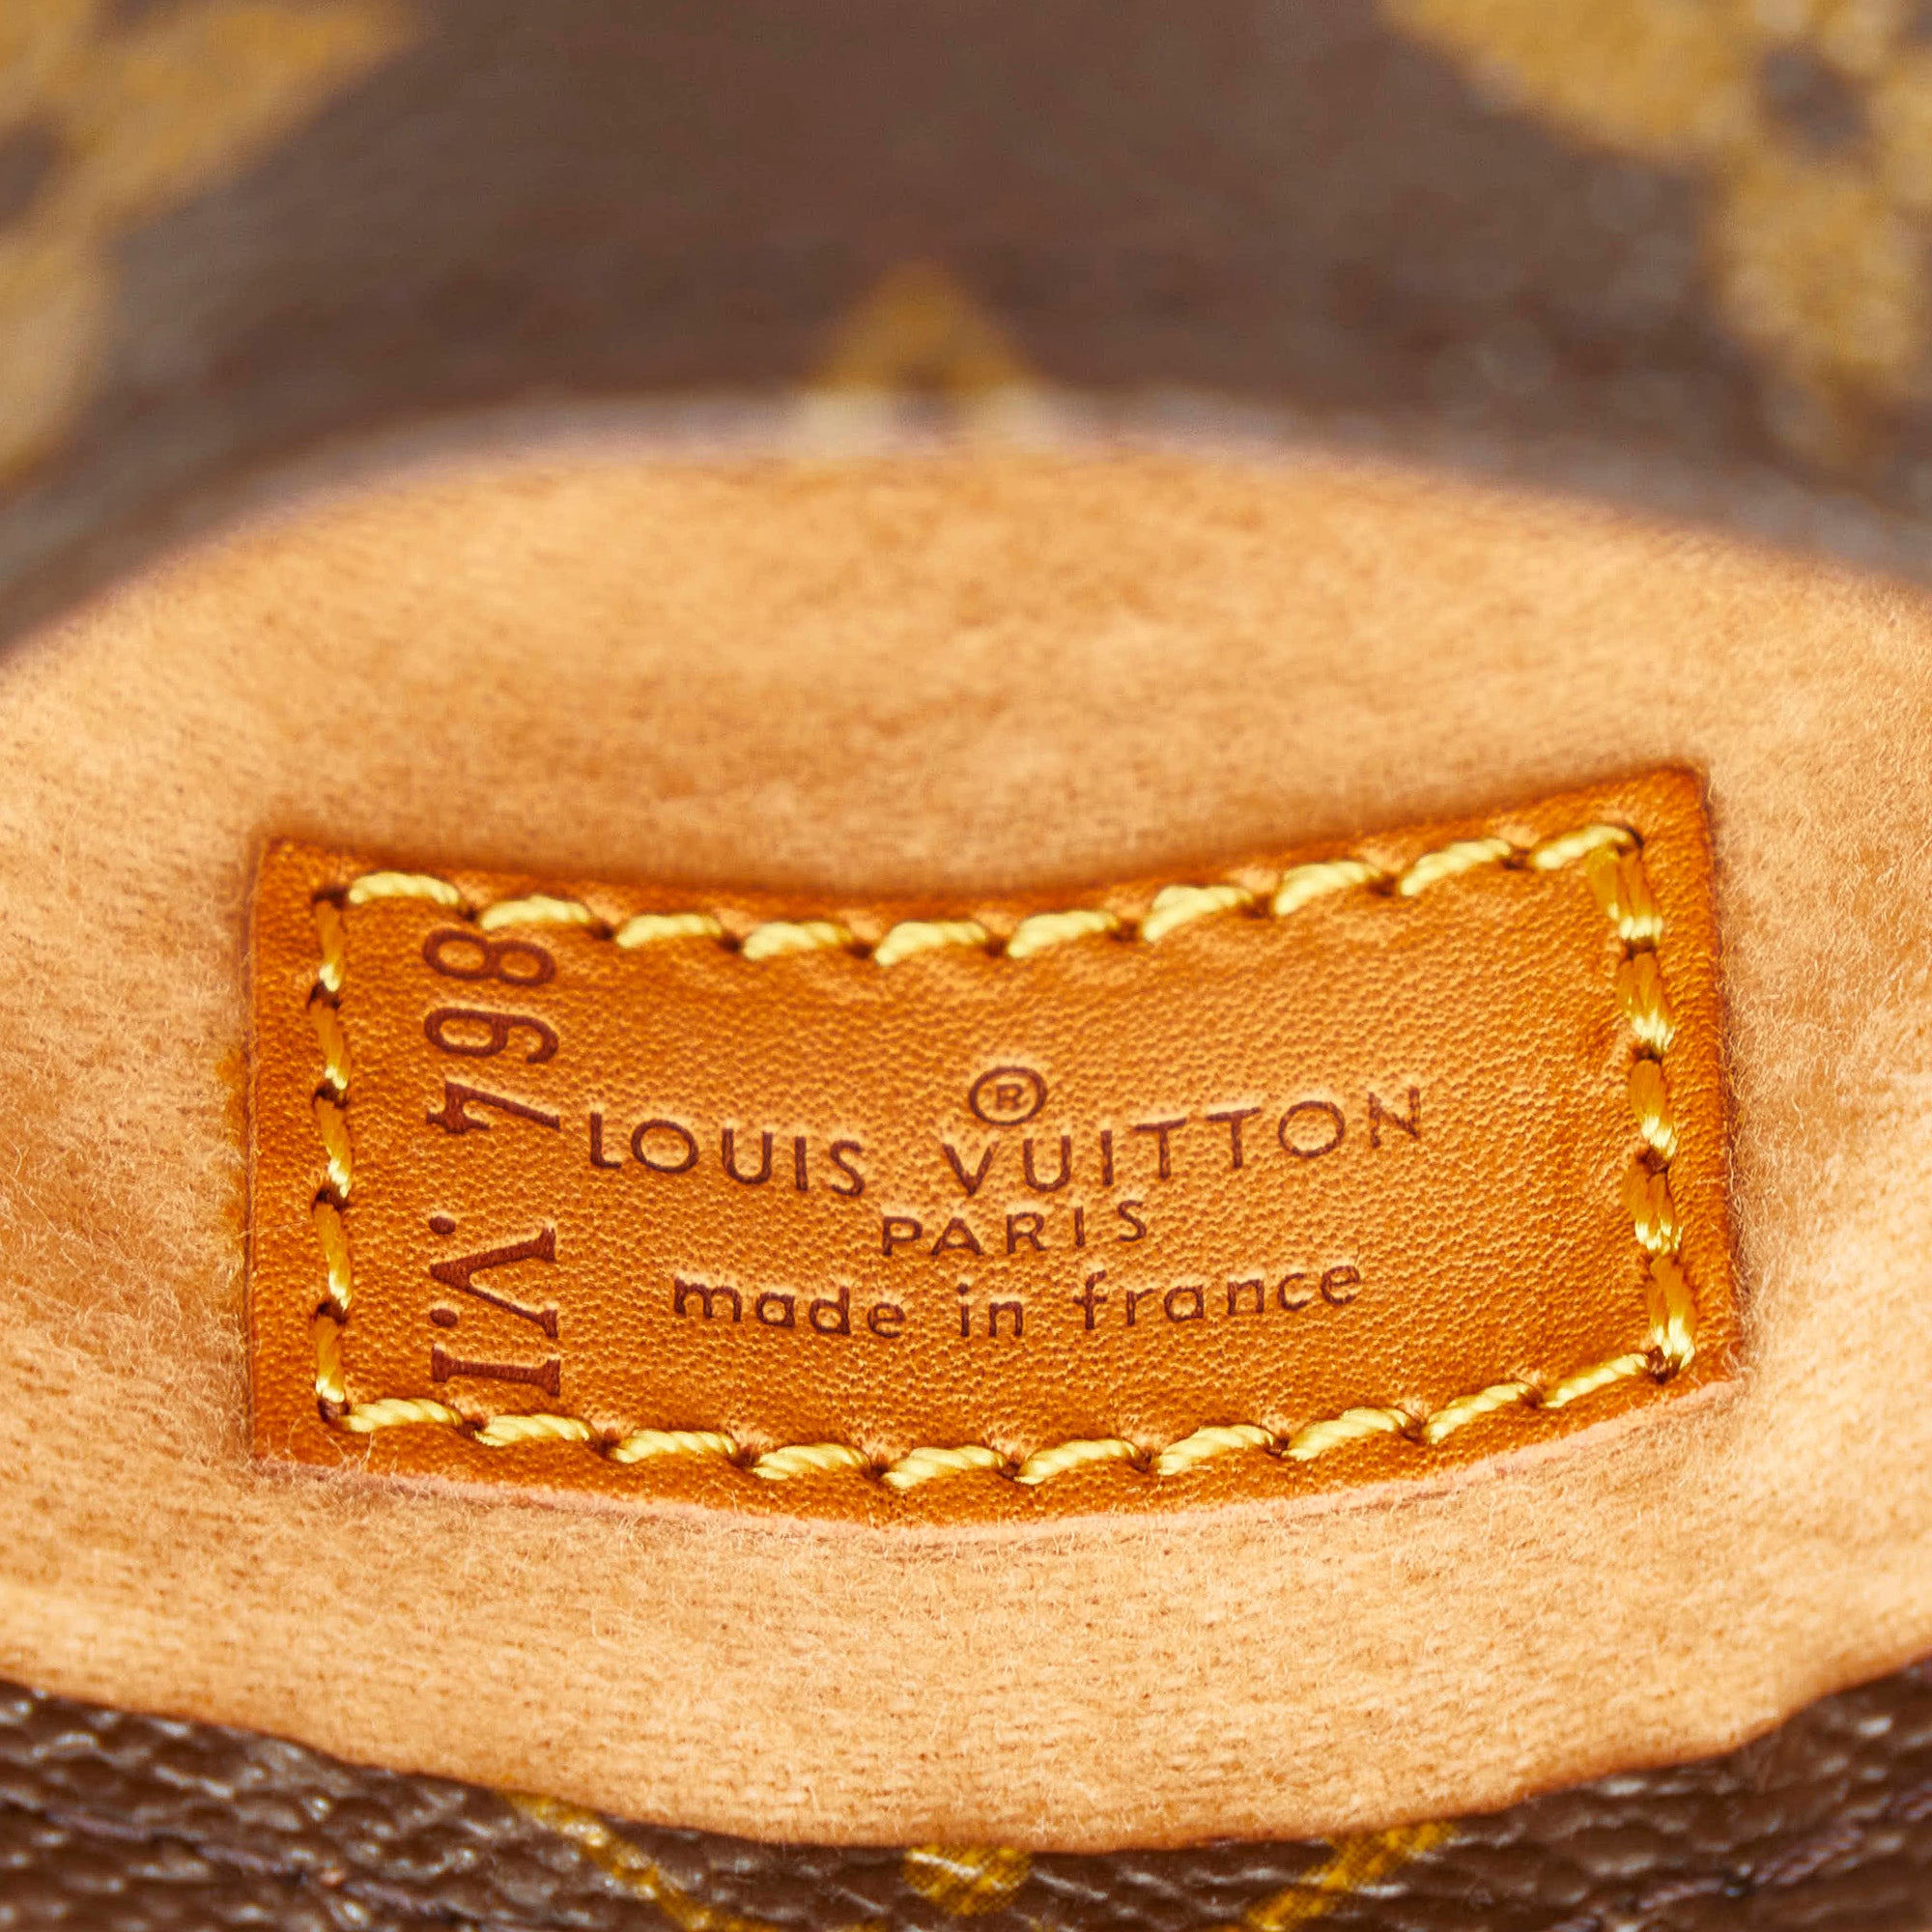 Louis Vuitton Monogram Golf Head Cover - Brown Sporting Goods